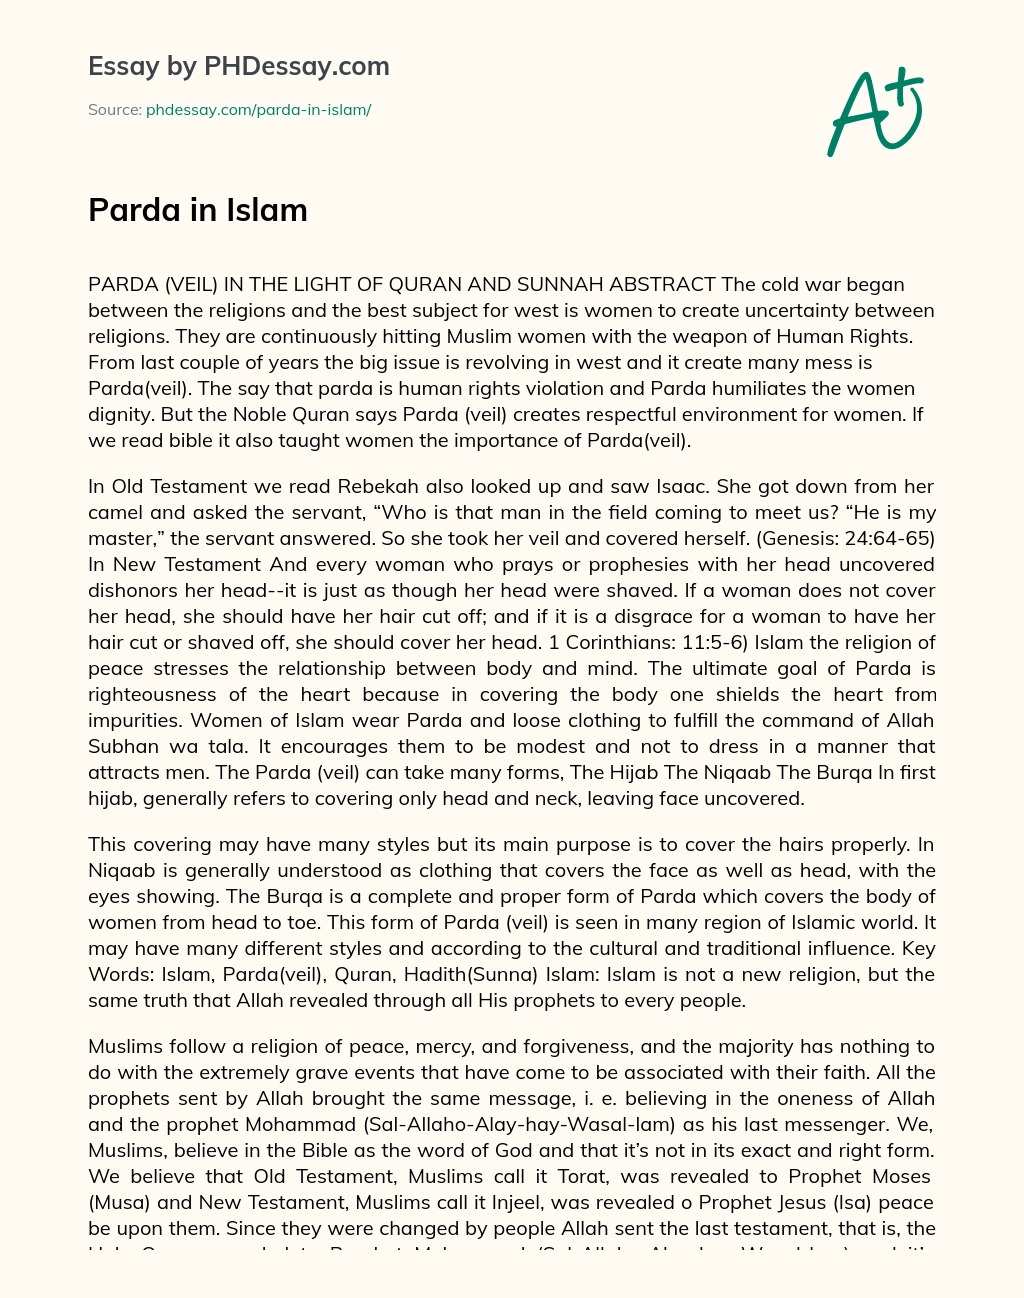 Parda in Islam essay